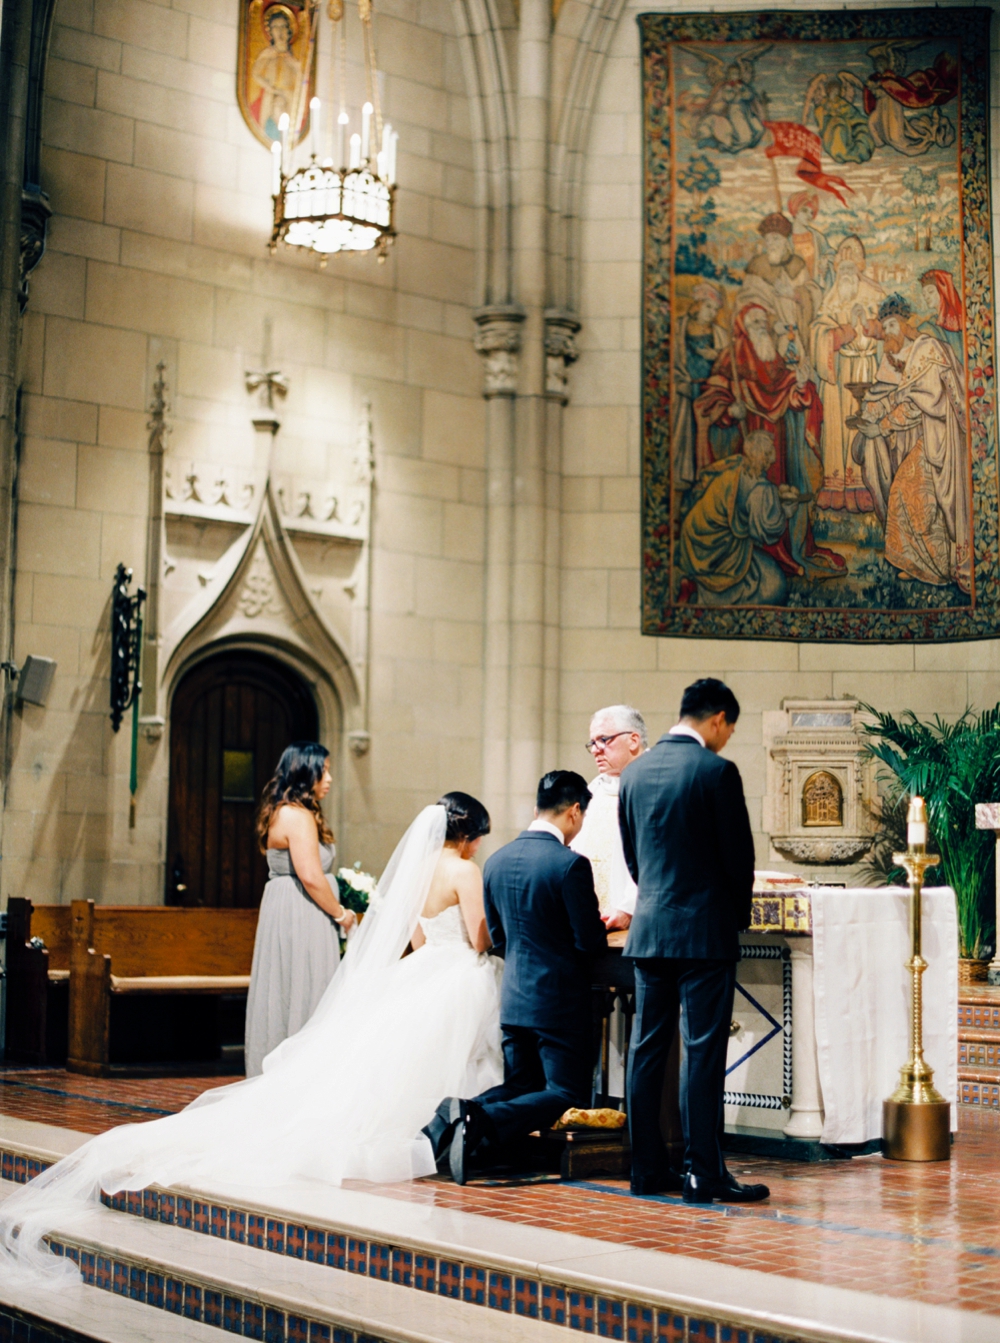 New York City Wedding | The Boat House Wedding Reception | Central Park Wedding Photographer | Calgary Wedding Photographers | Church Wedding